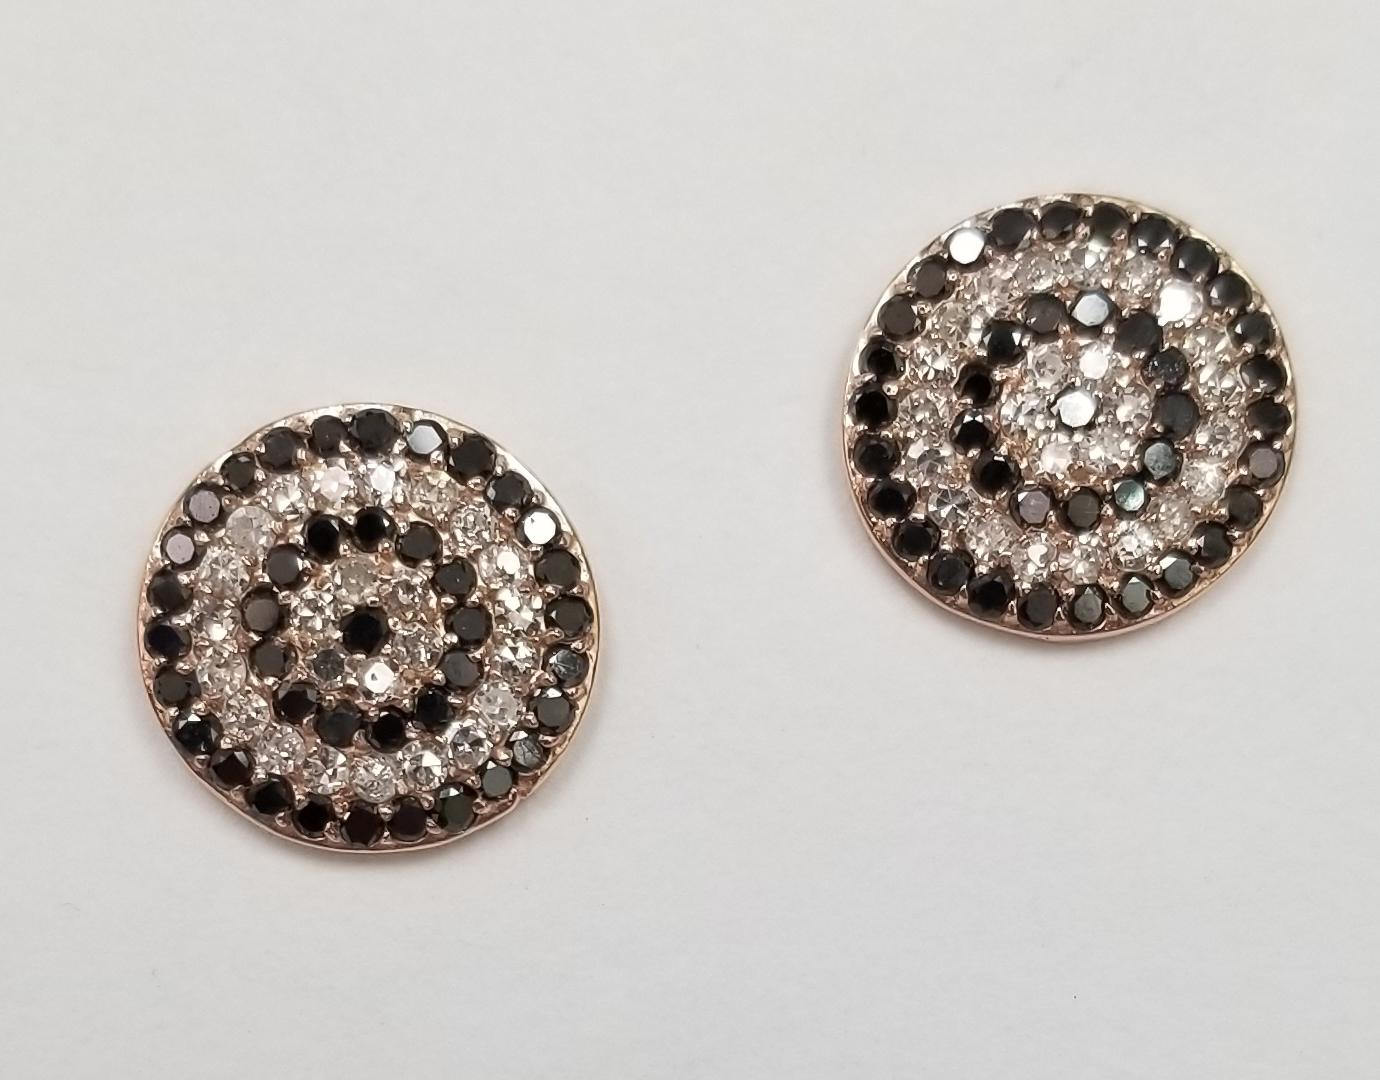  14k rose gold white and black diamond swirl earrings
Specifications:
    main stone: 50 pcs white single diamonds .50pts.
    stones: 80 pcs black diamonds .80pts. 
    color: F-G
    clarity:  VS2-SI1
    brand: NONE
    metal: 14K rose gold
   